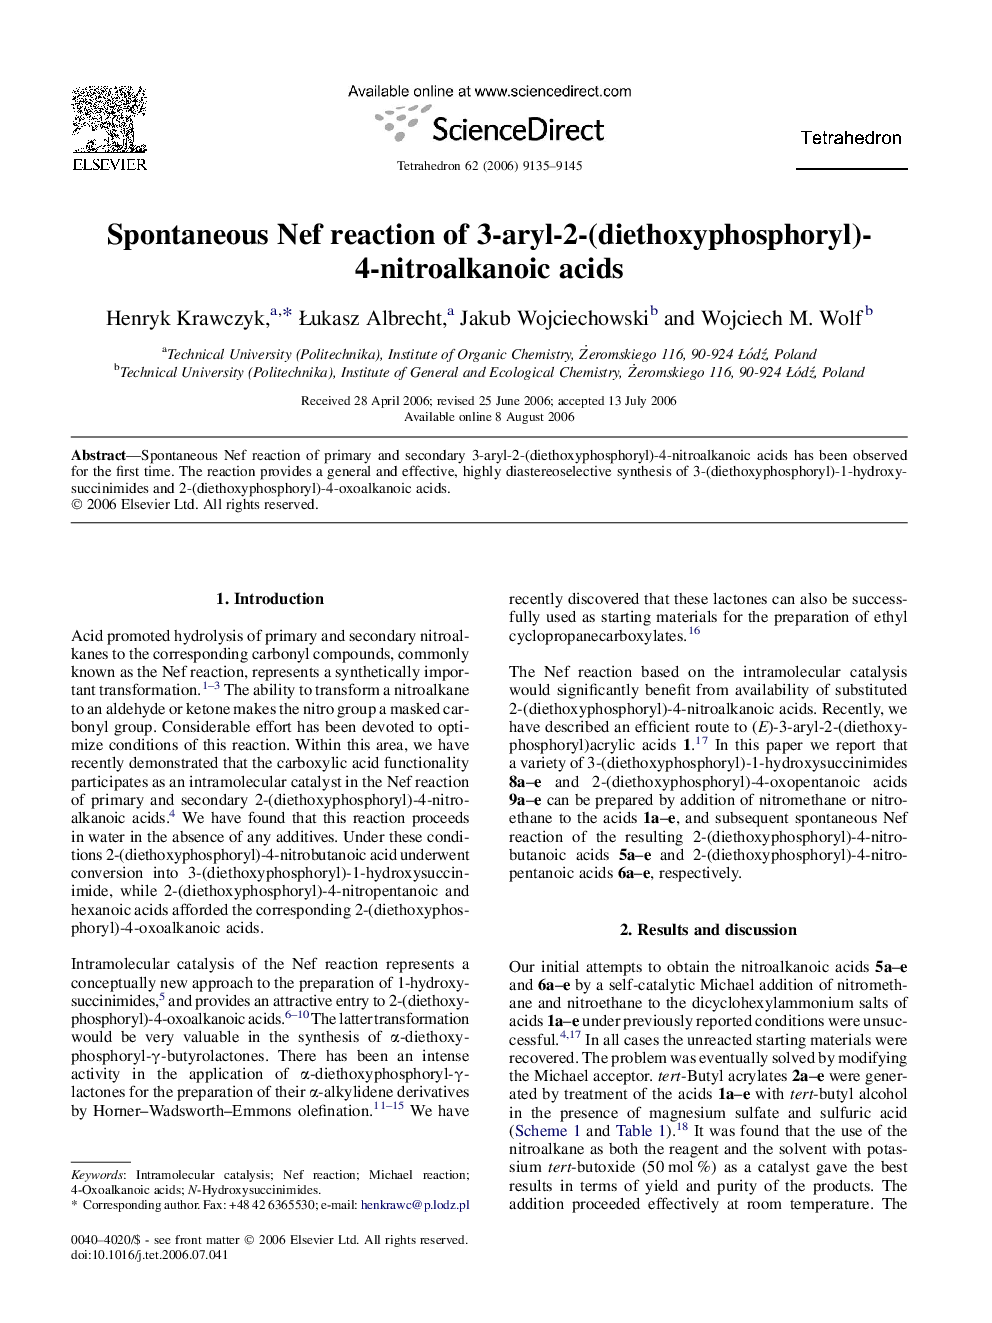 Spontaneous Nef reaction of 3-aryl-2-(diethoxyphosphoryl)-4-nitroalkanoic acids